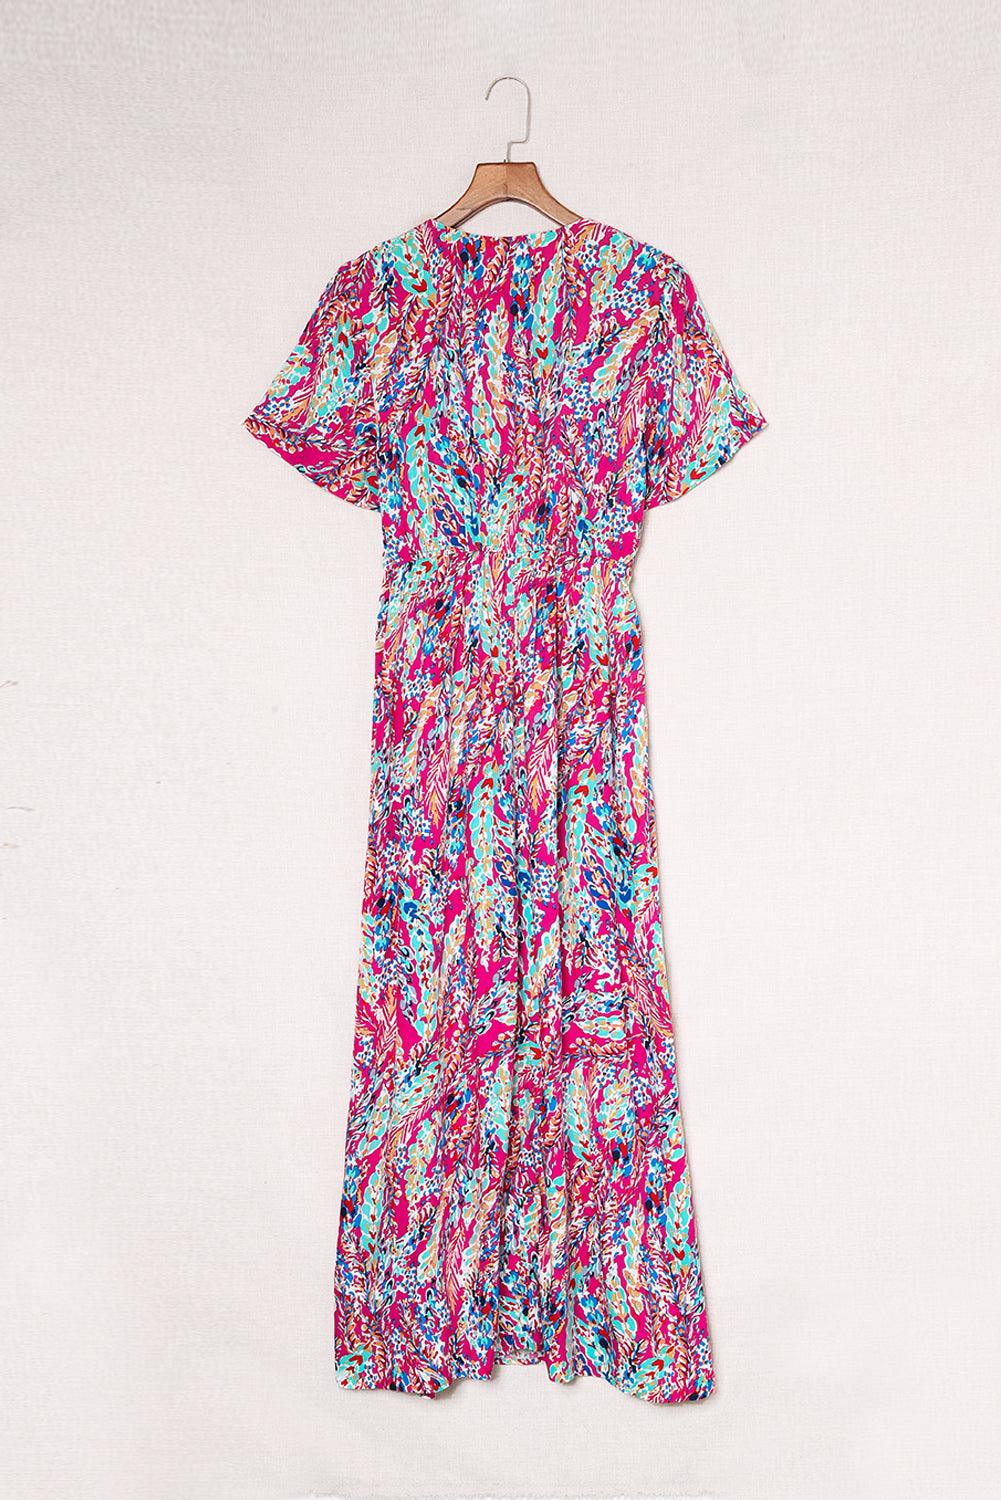 Wrap V Neck Floral Sundress Style Maxi Dress for Women